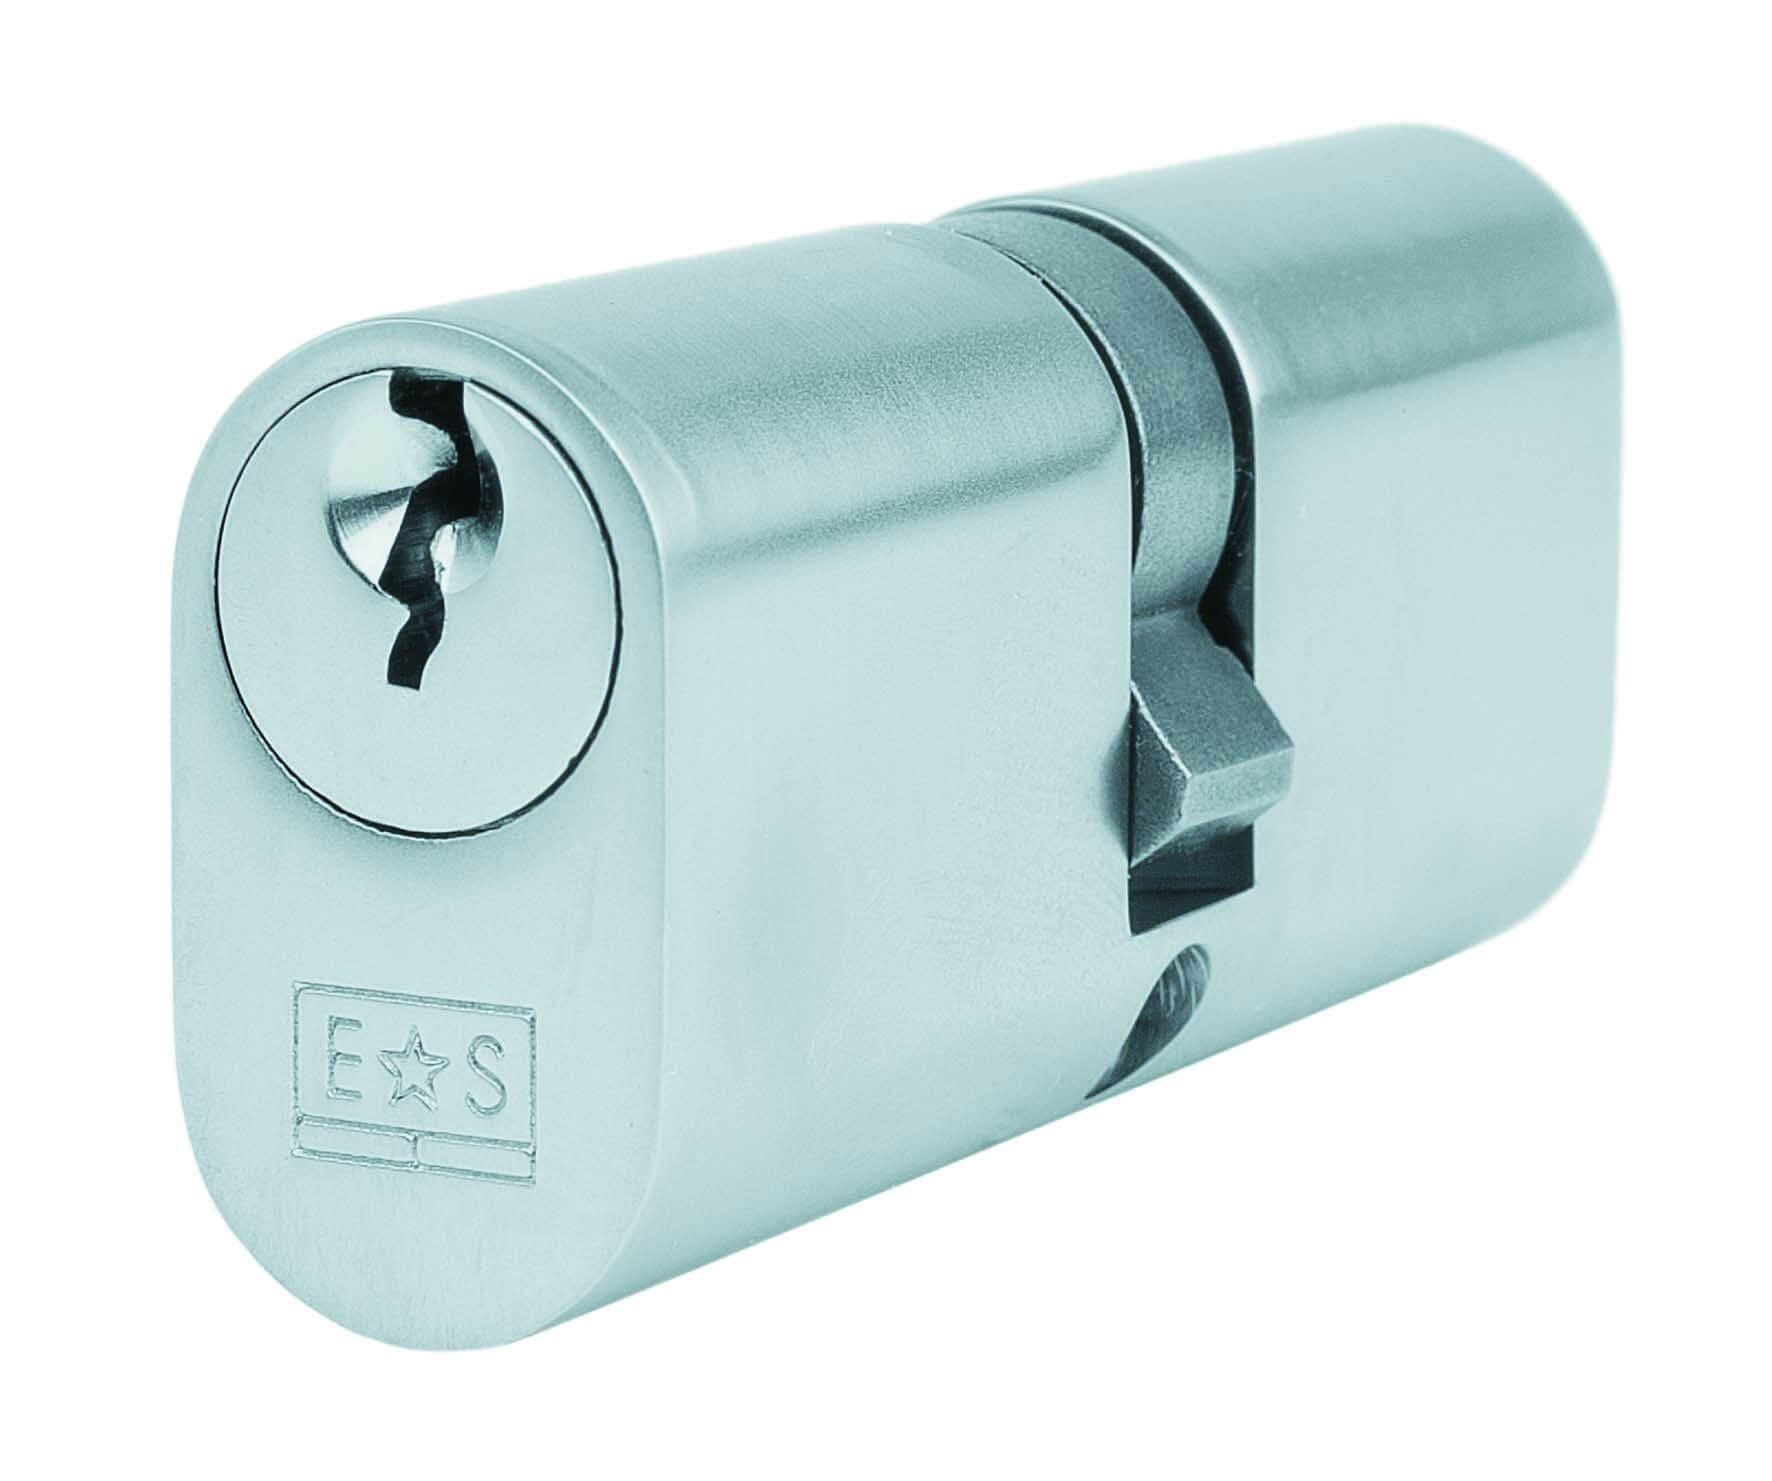 Eurospec 80mm Oval Double Cylinder Lock